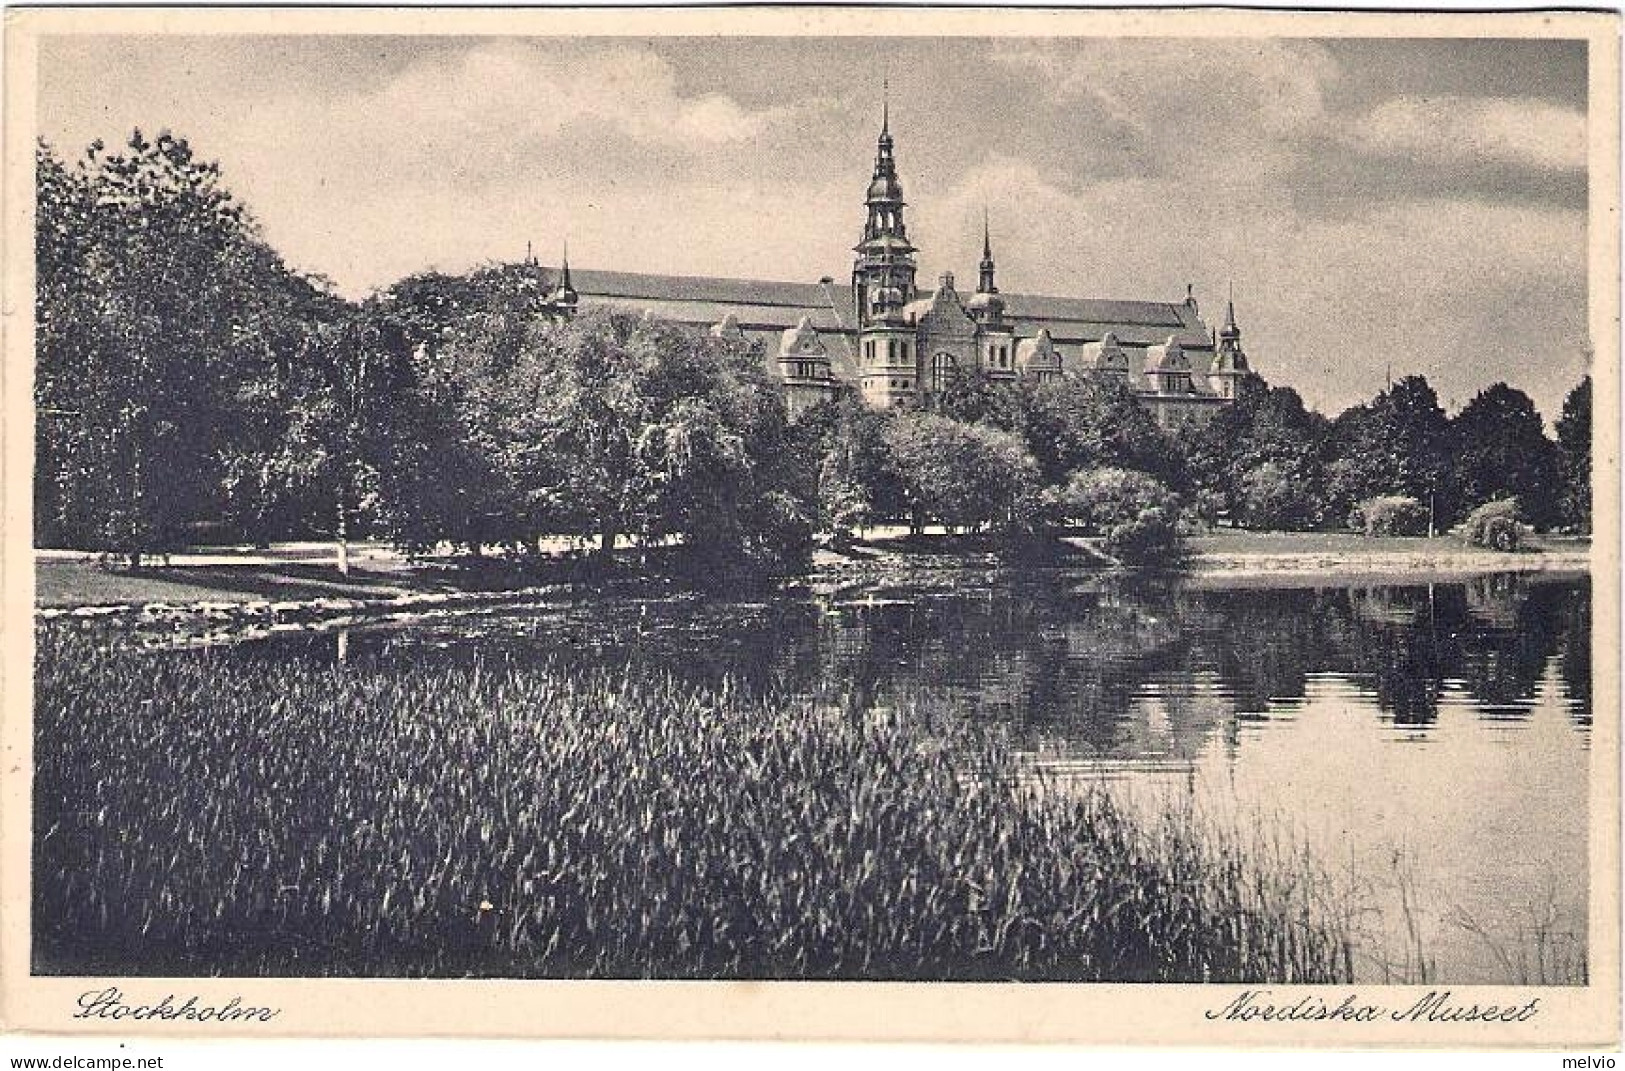 1920circa-Svezia Cartolina "Stockholm Nordiska Museet" - Zweden